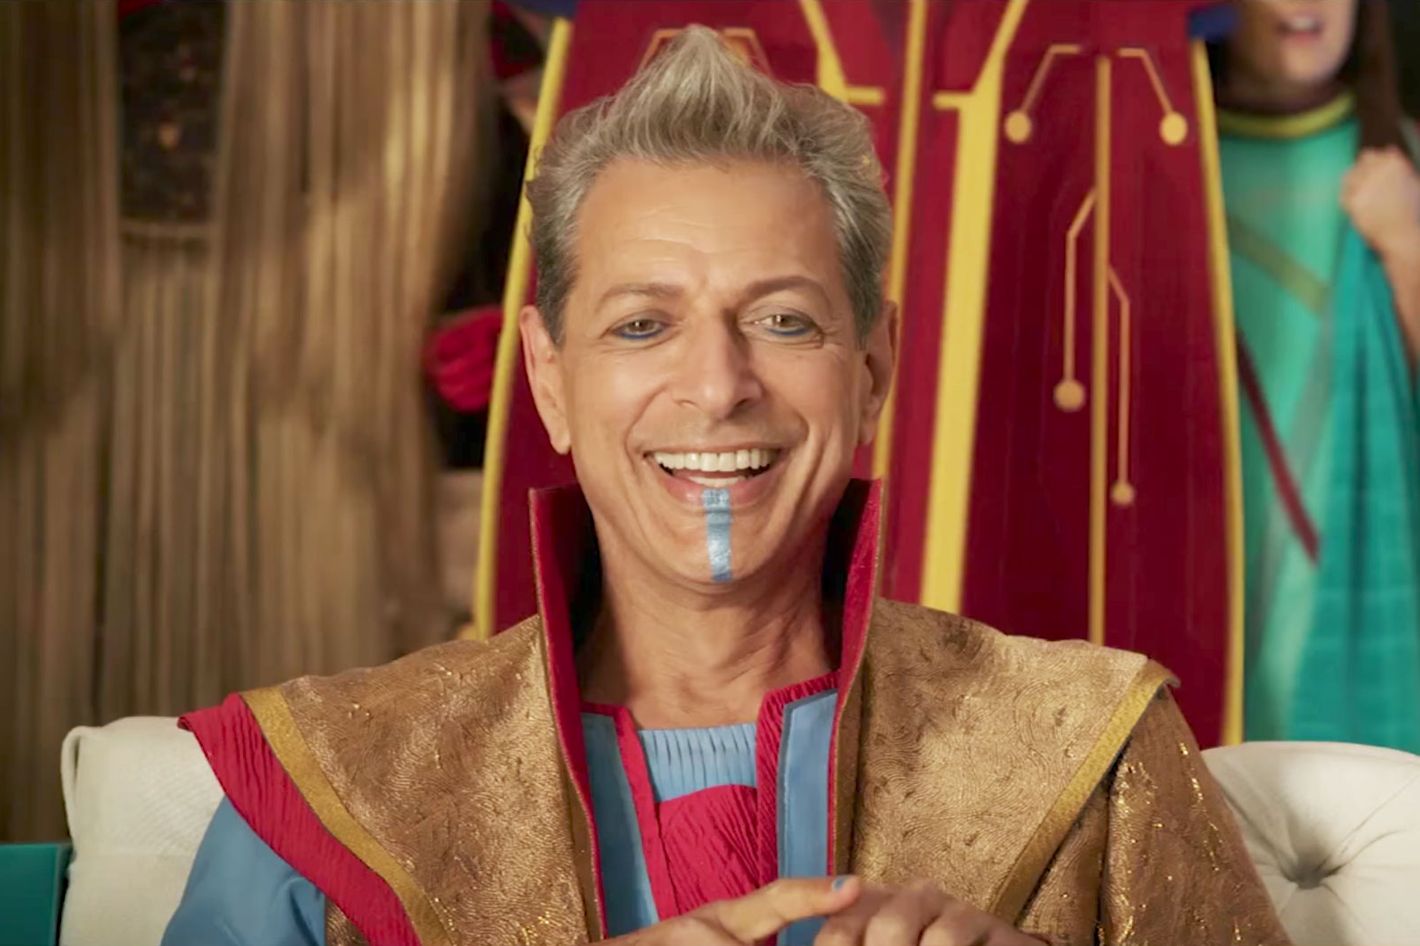 Enjoy Jeff Goldblum Complimenting Thor: Ragnarok Actors